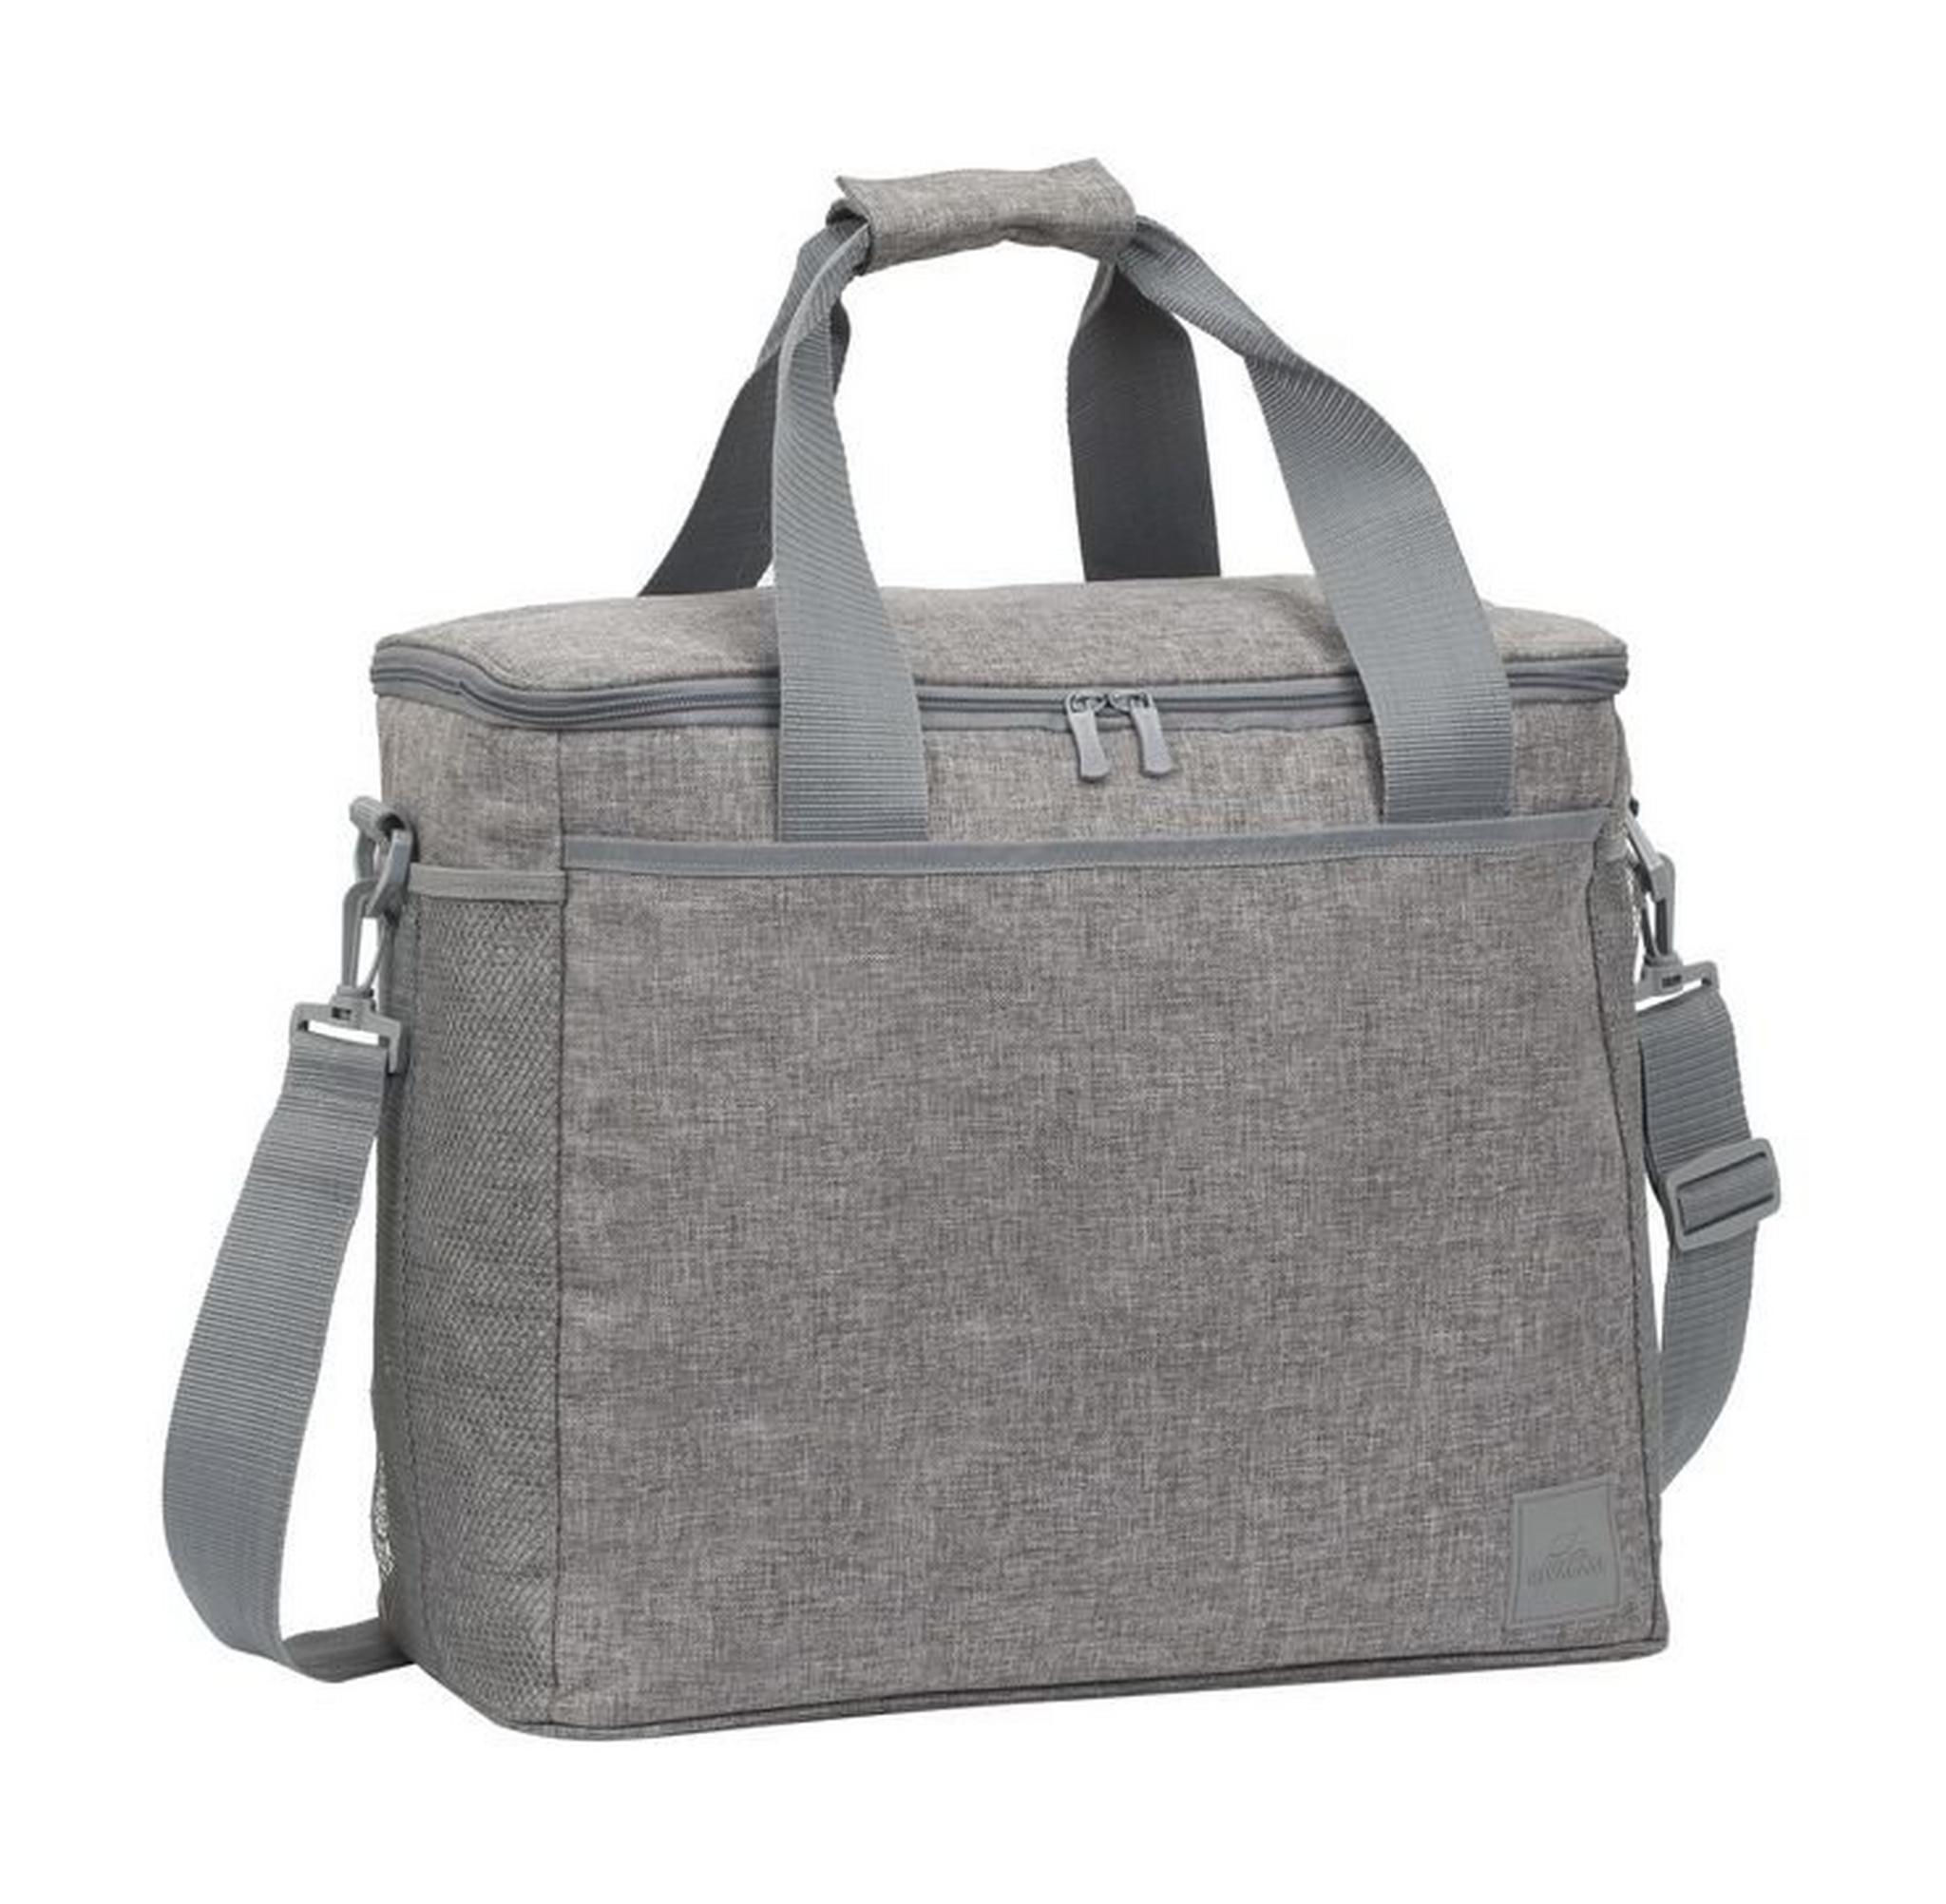 RivaCase 30L Cooler Bag (5736) - Grey